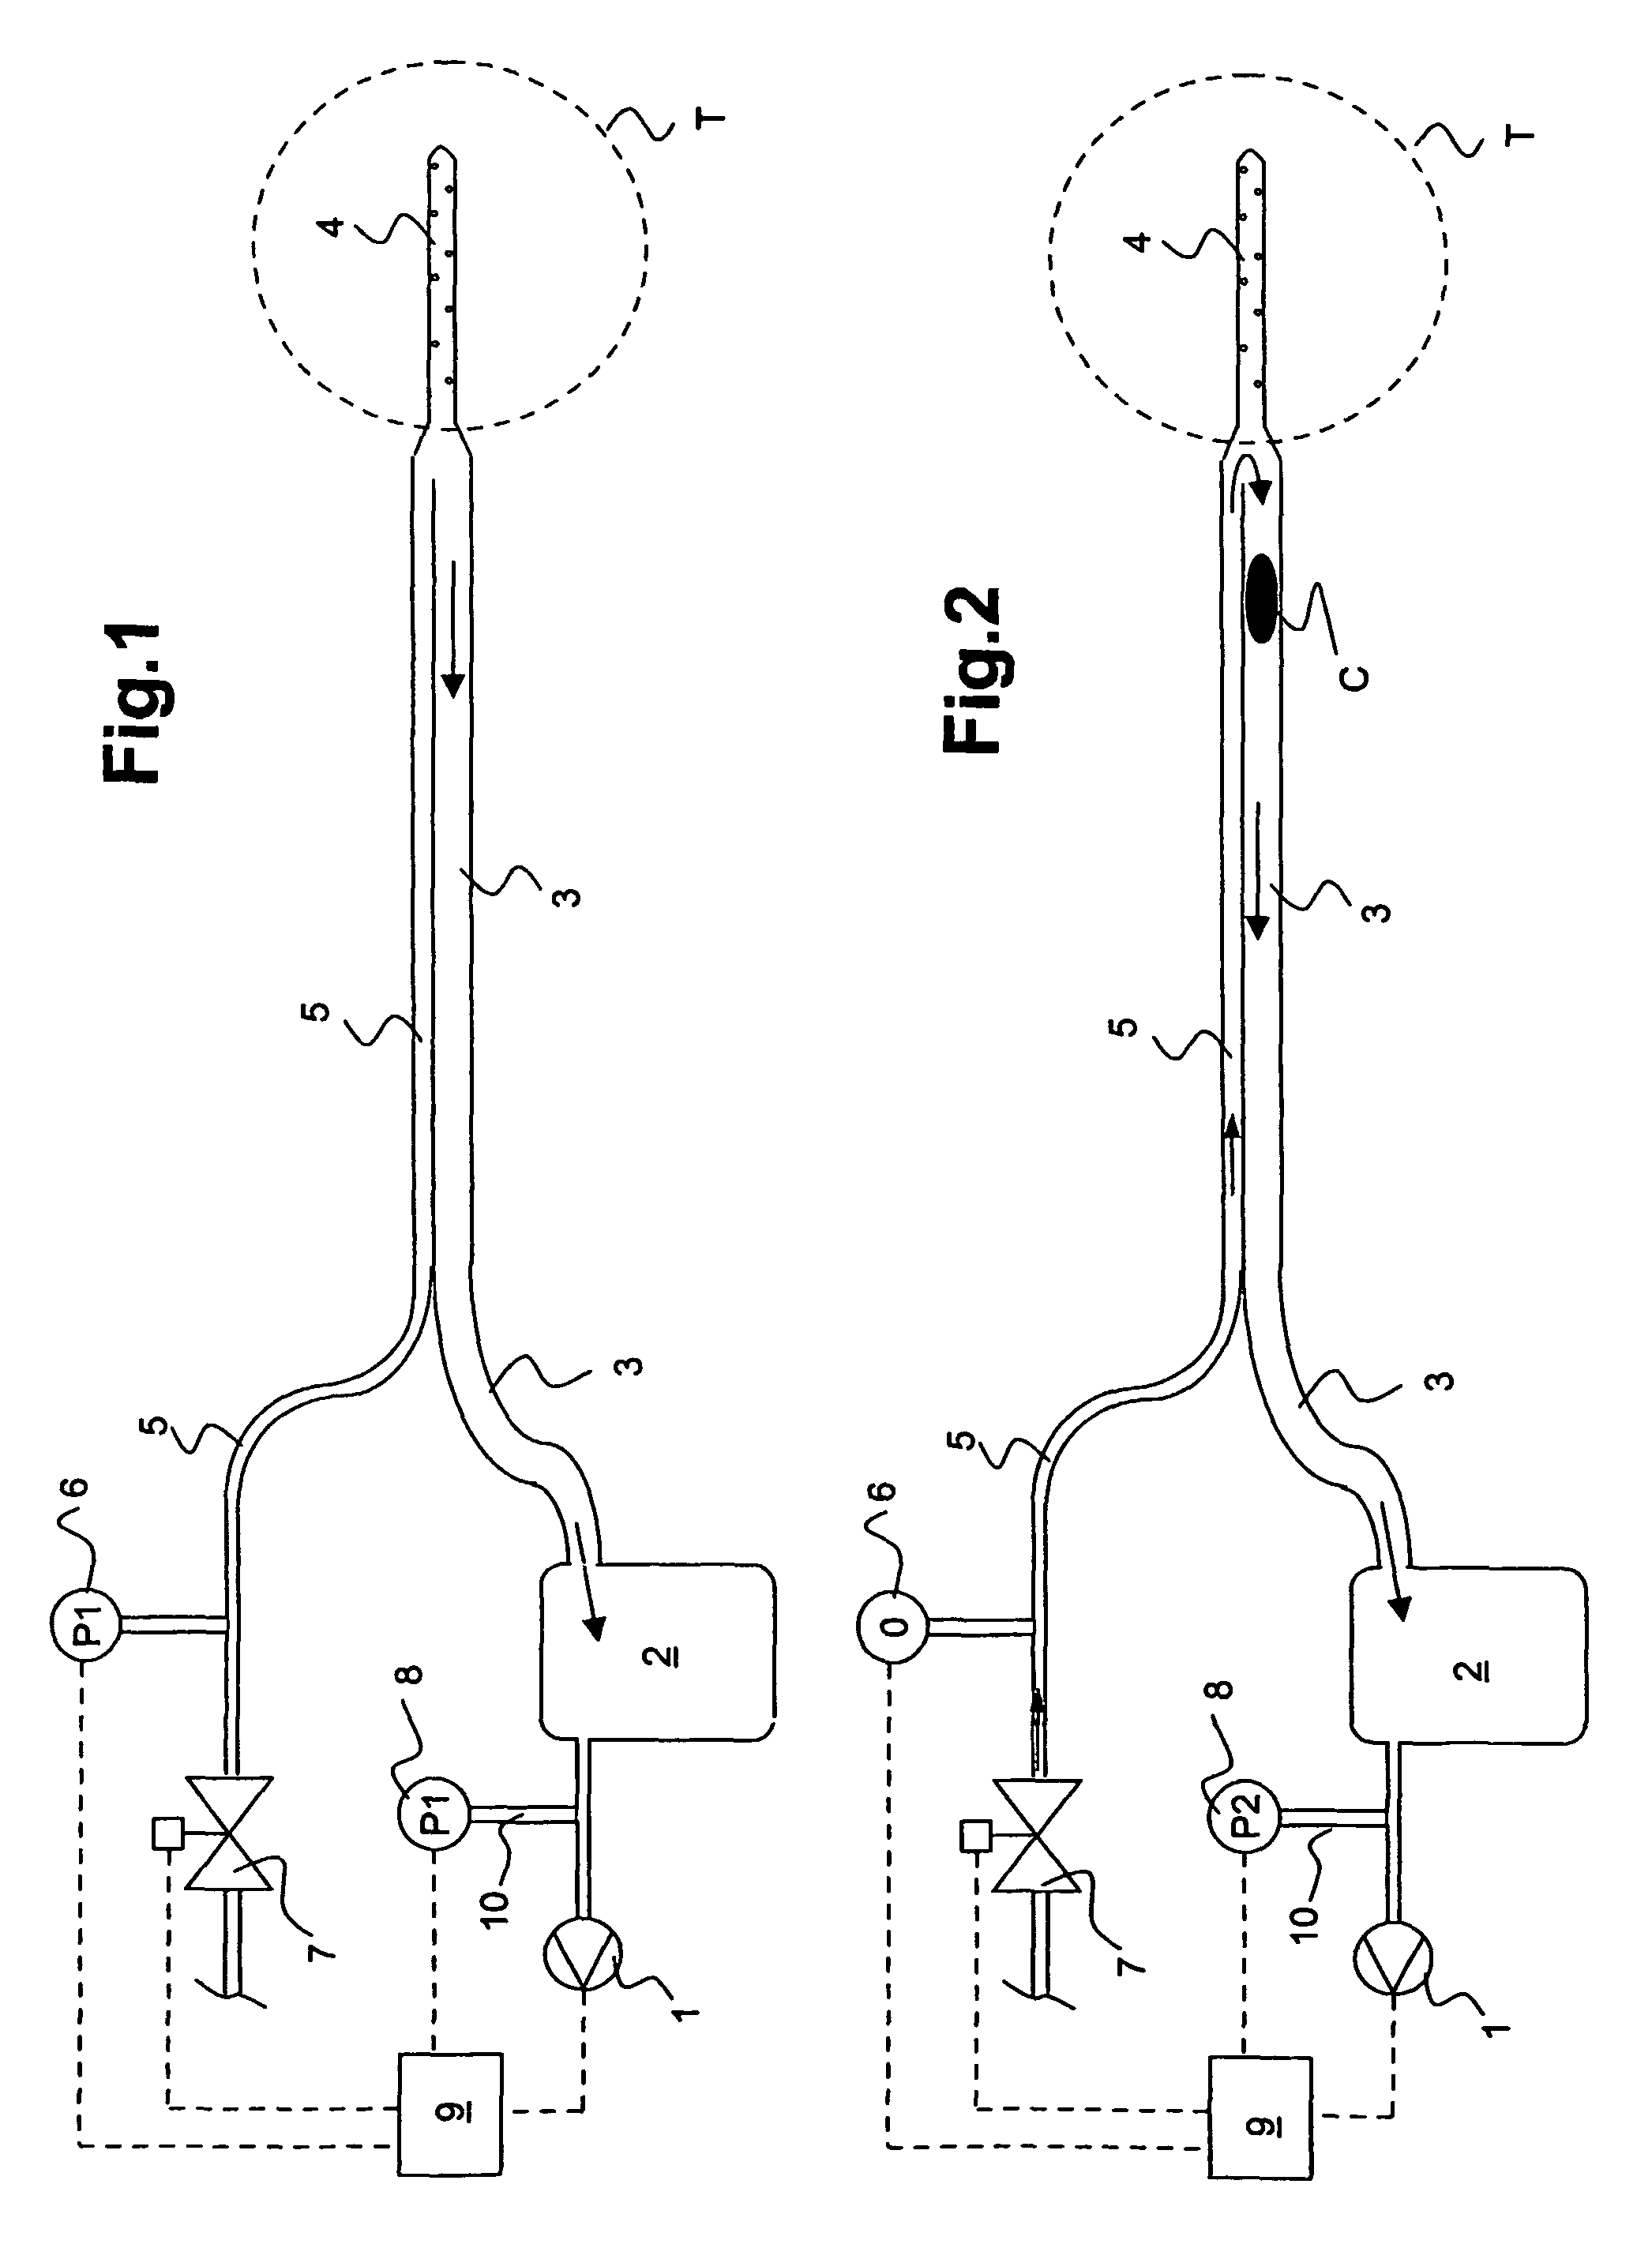 Drainage apparatus and method